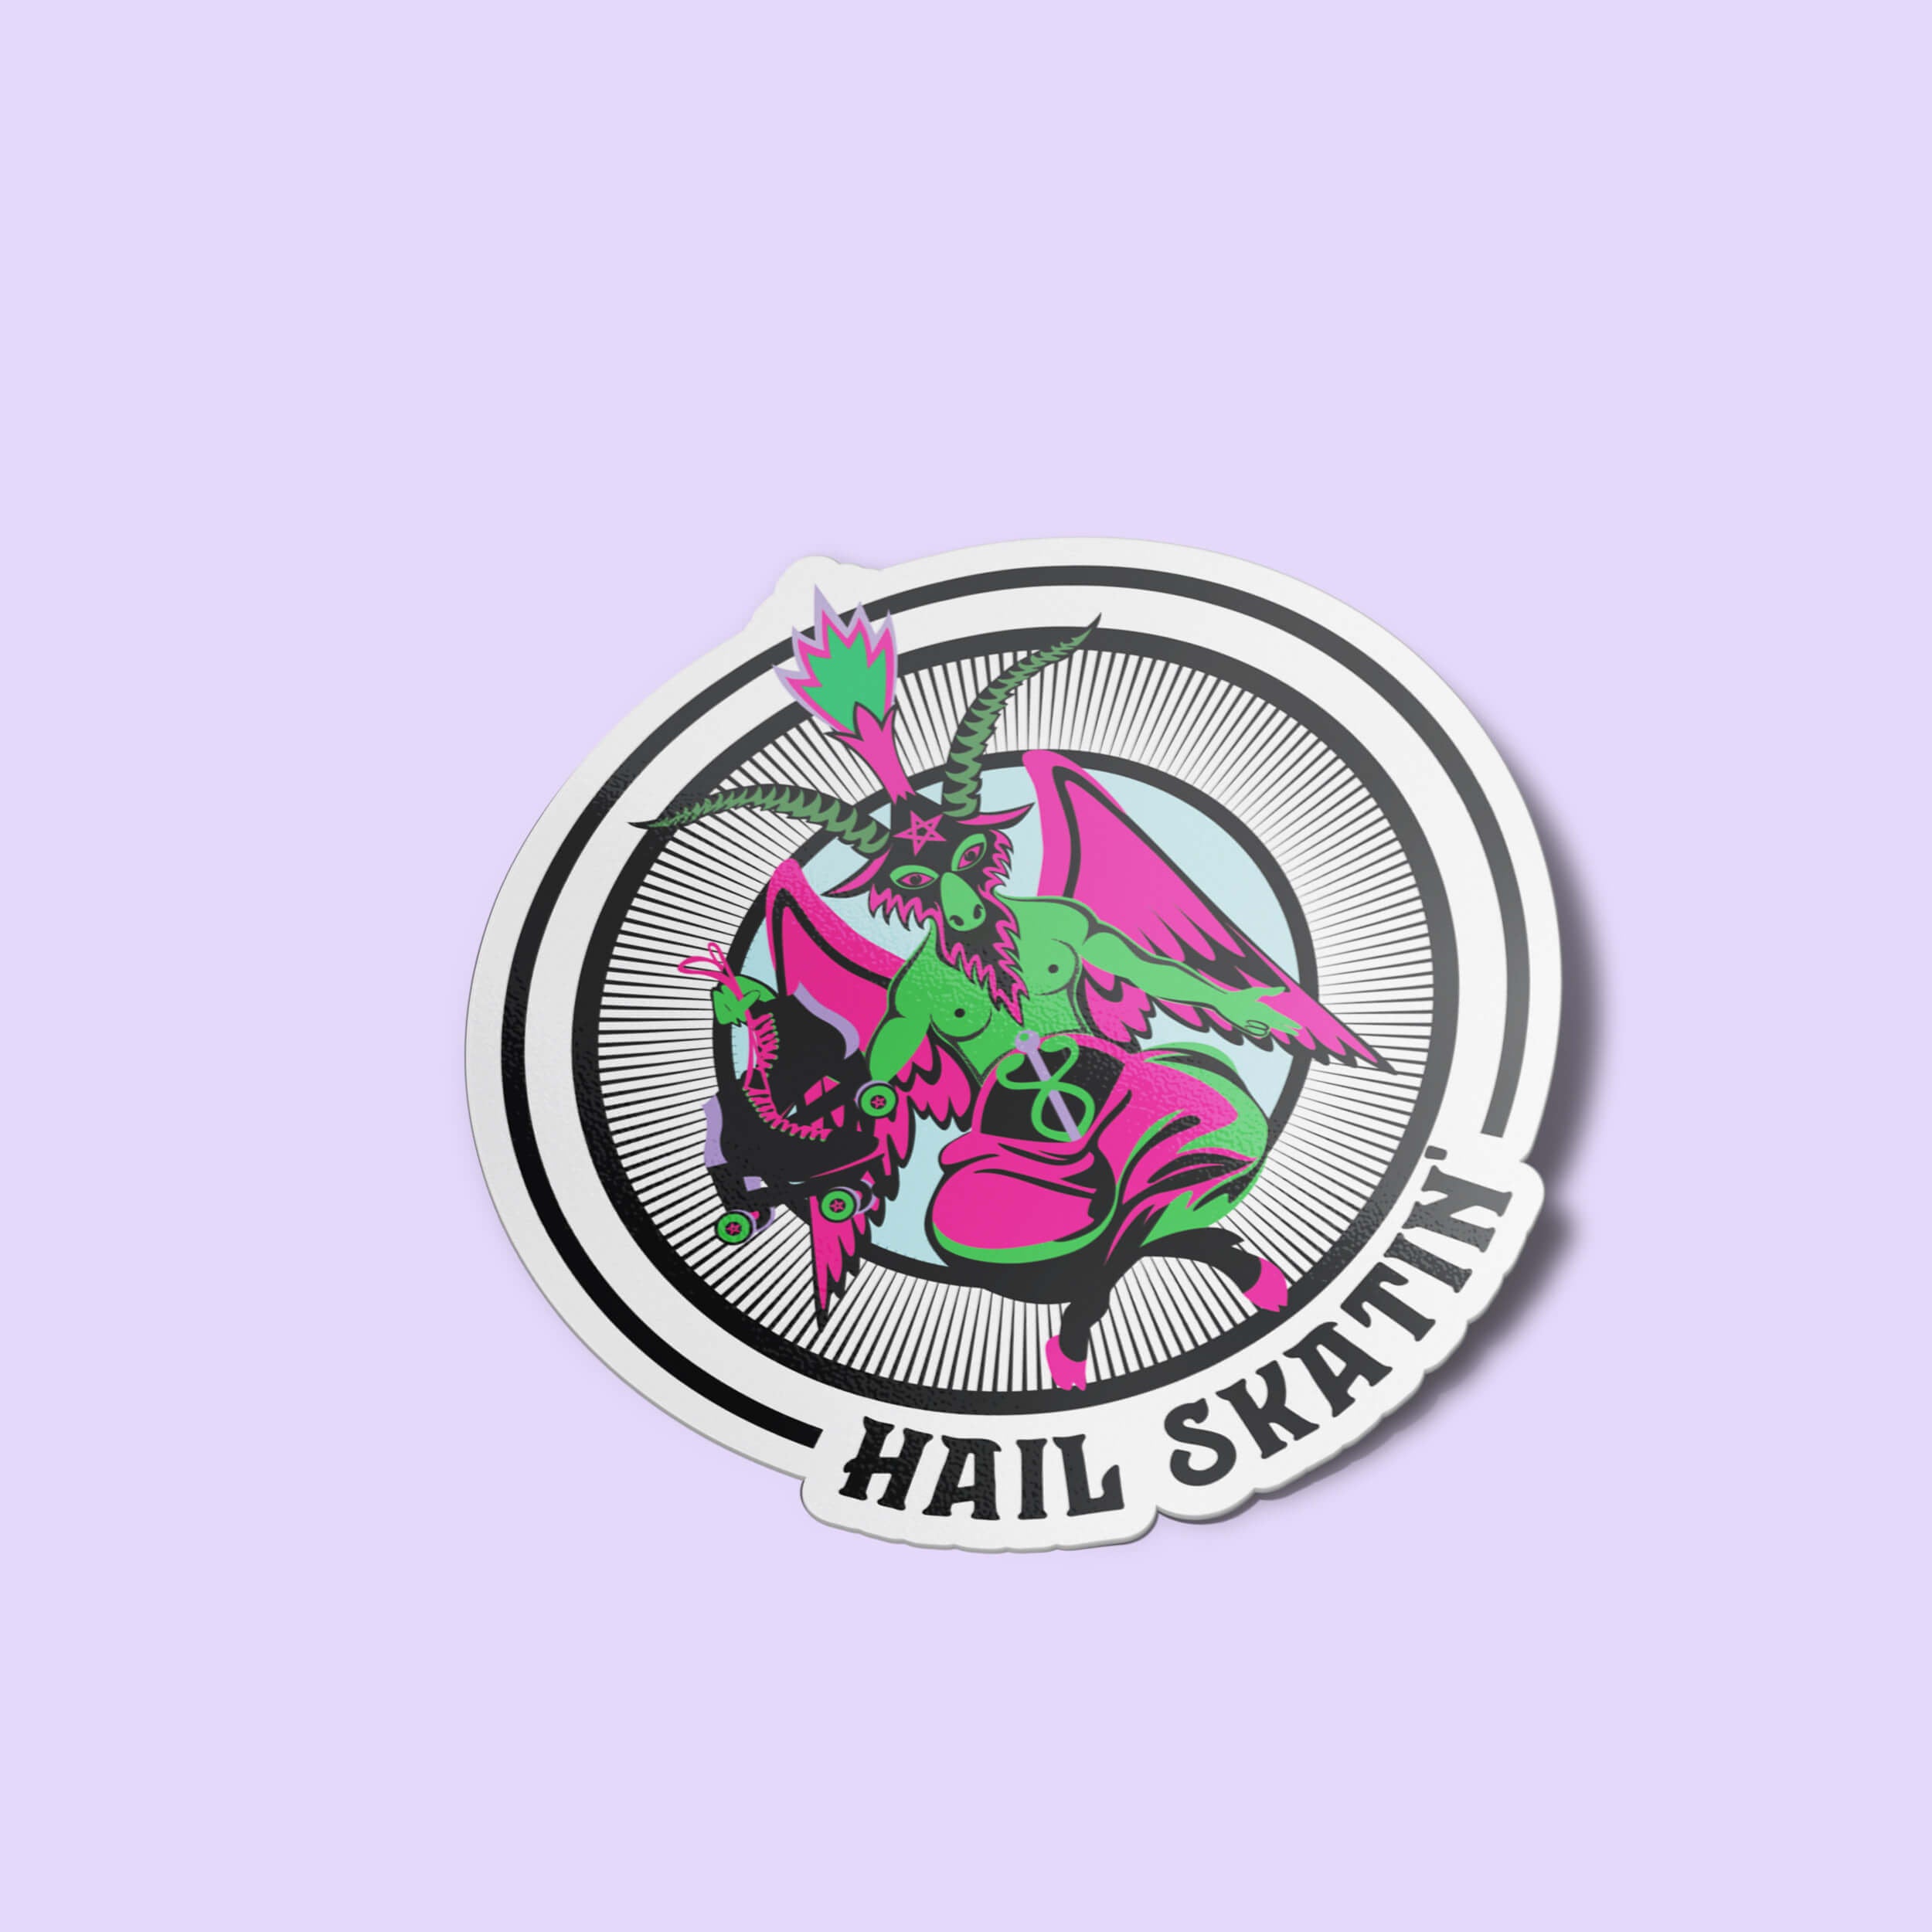 Hail Skatin' Roller Skate Vinyl Sticker, Pentagram Hydroflask Roller Derby Sticker, Roller Skating Accessories and Gifts